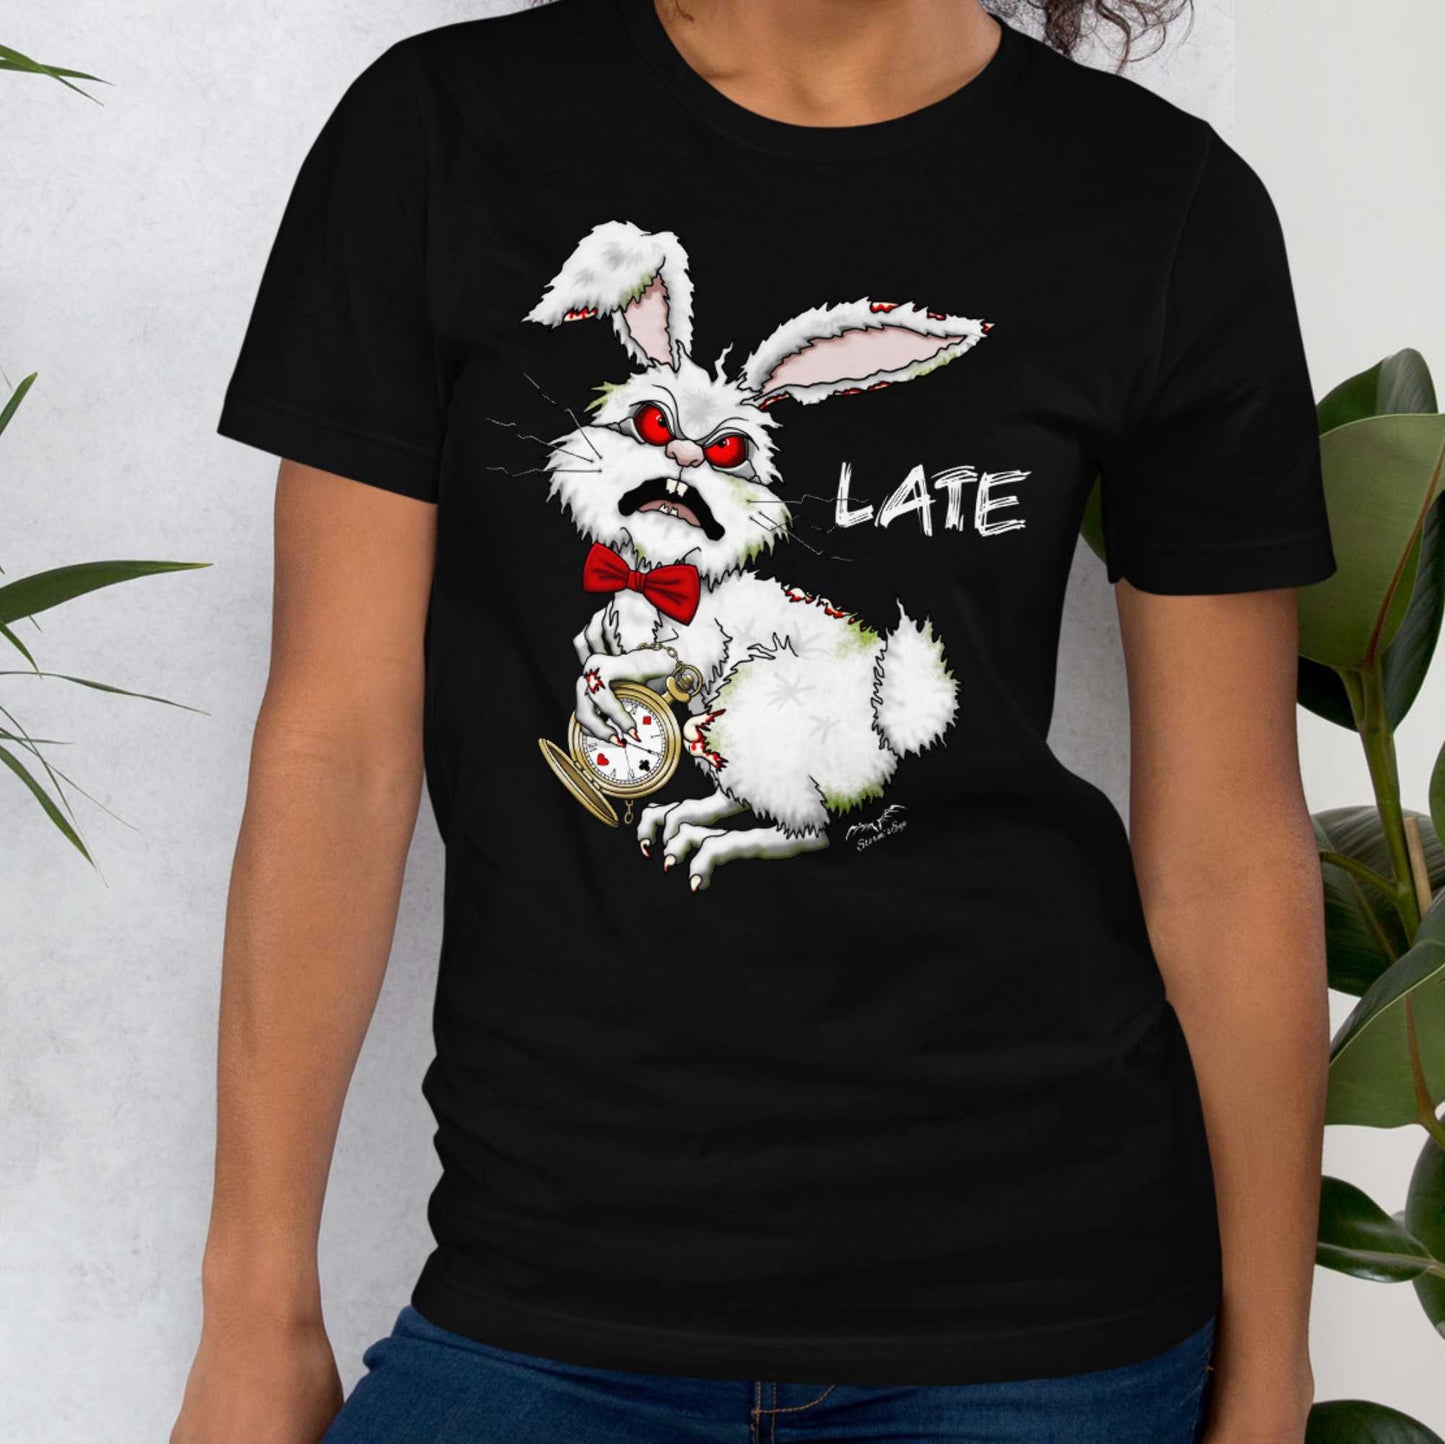 Stormseye Design zombie bunny t shirt, modelled view black